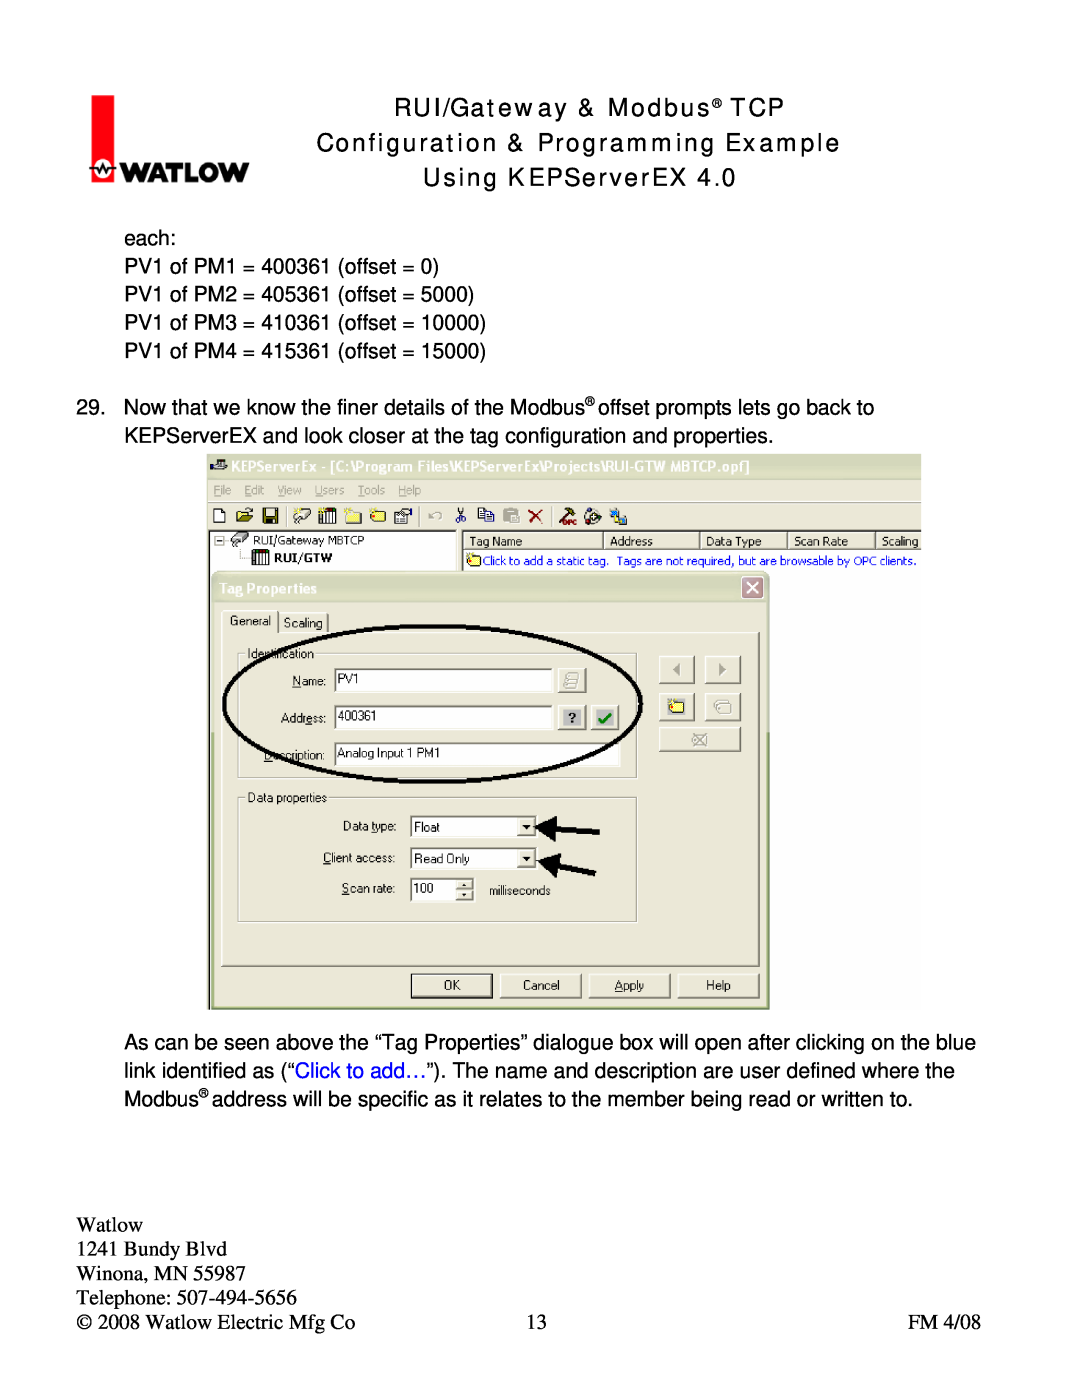 Watlow Electric user manual RUI/Gateway & Modbus TCP Configuration & Programming Example, Using KEPServerEX, each 